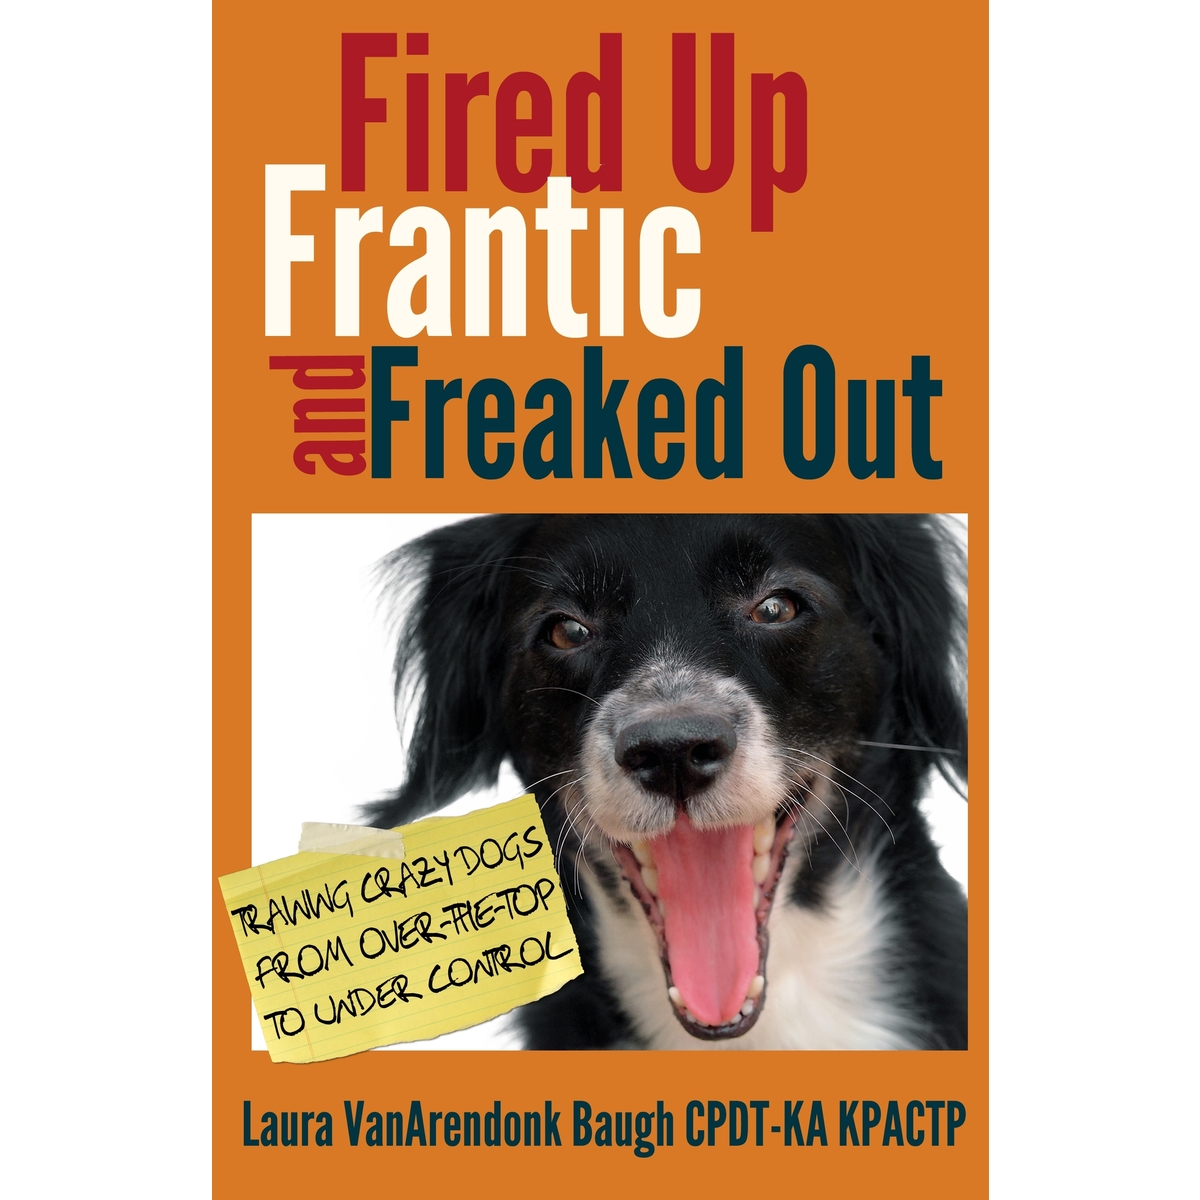 Fired Up, Frantic, & Freaked Out by Laura VanArendonk Baugh CPDT-KA KPACTP (paperback signed copy)